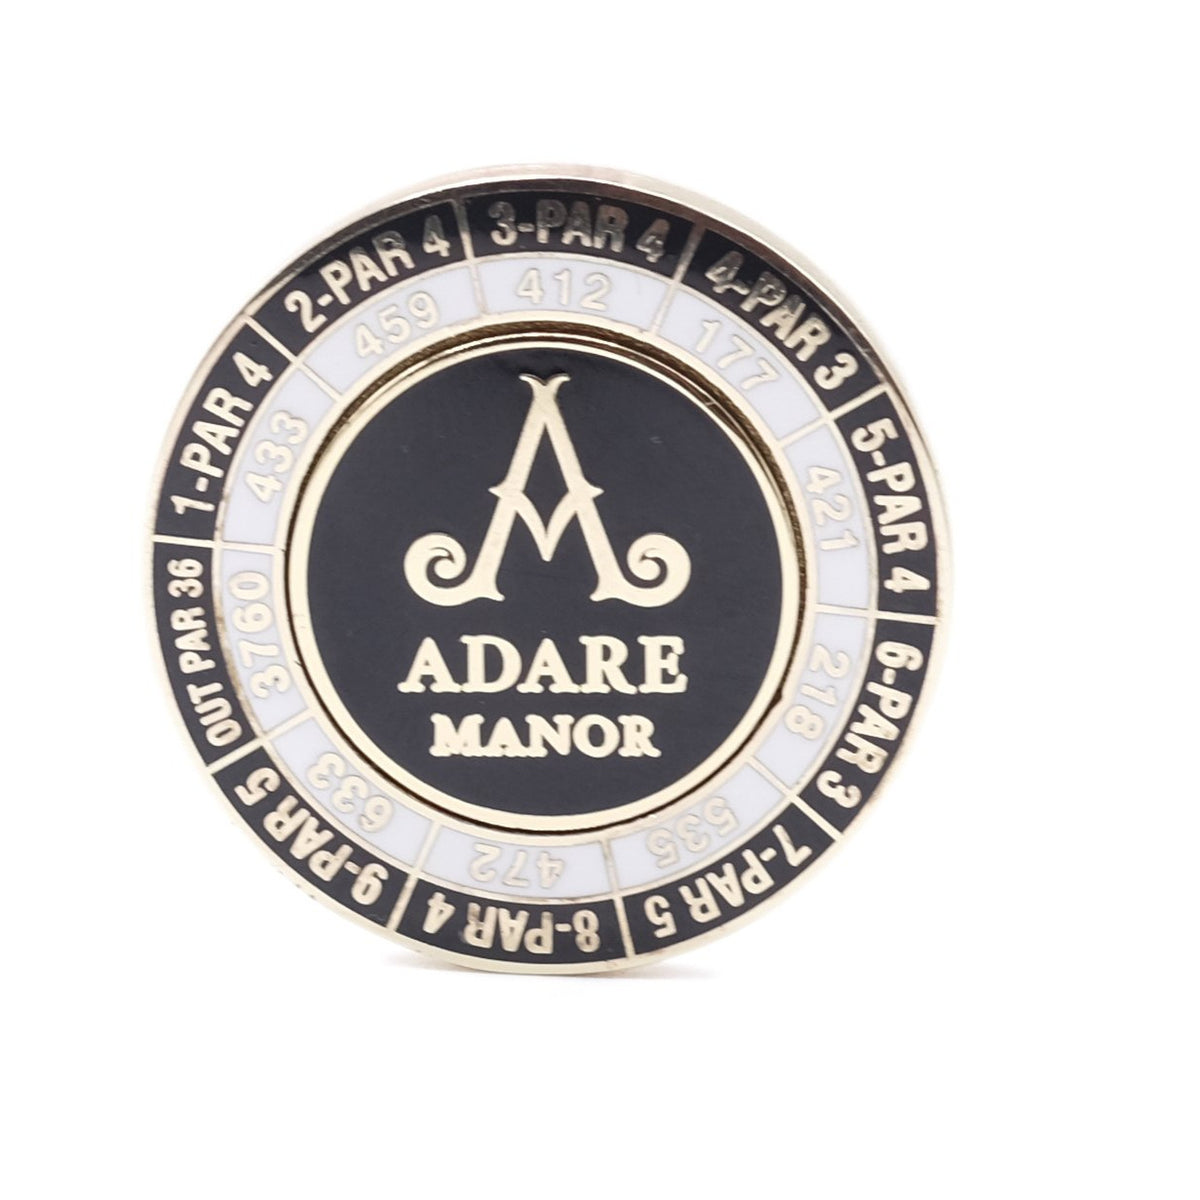 Adare Manor Collector’s Coin